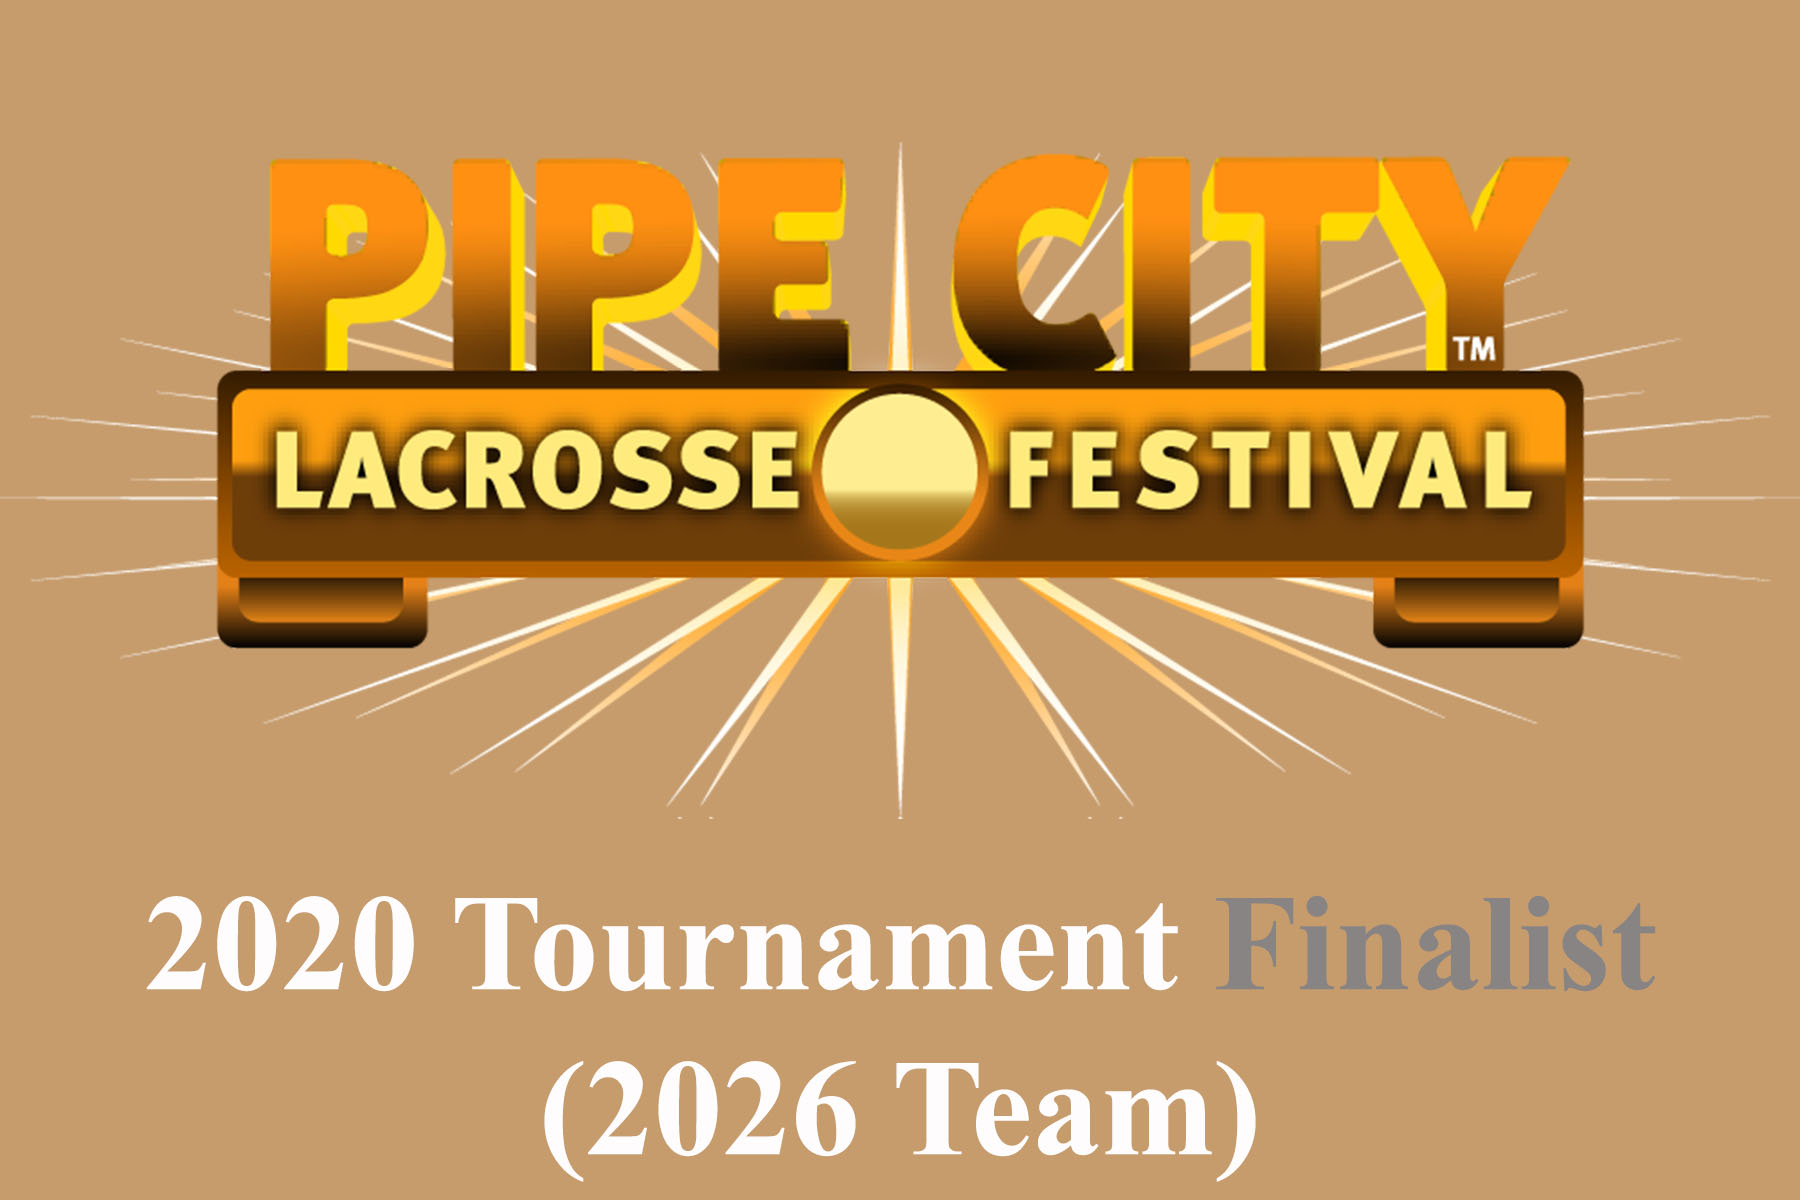 Pipe City Finalist 2026